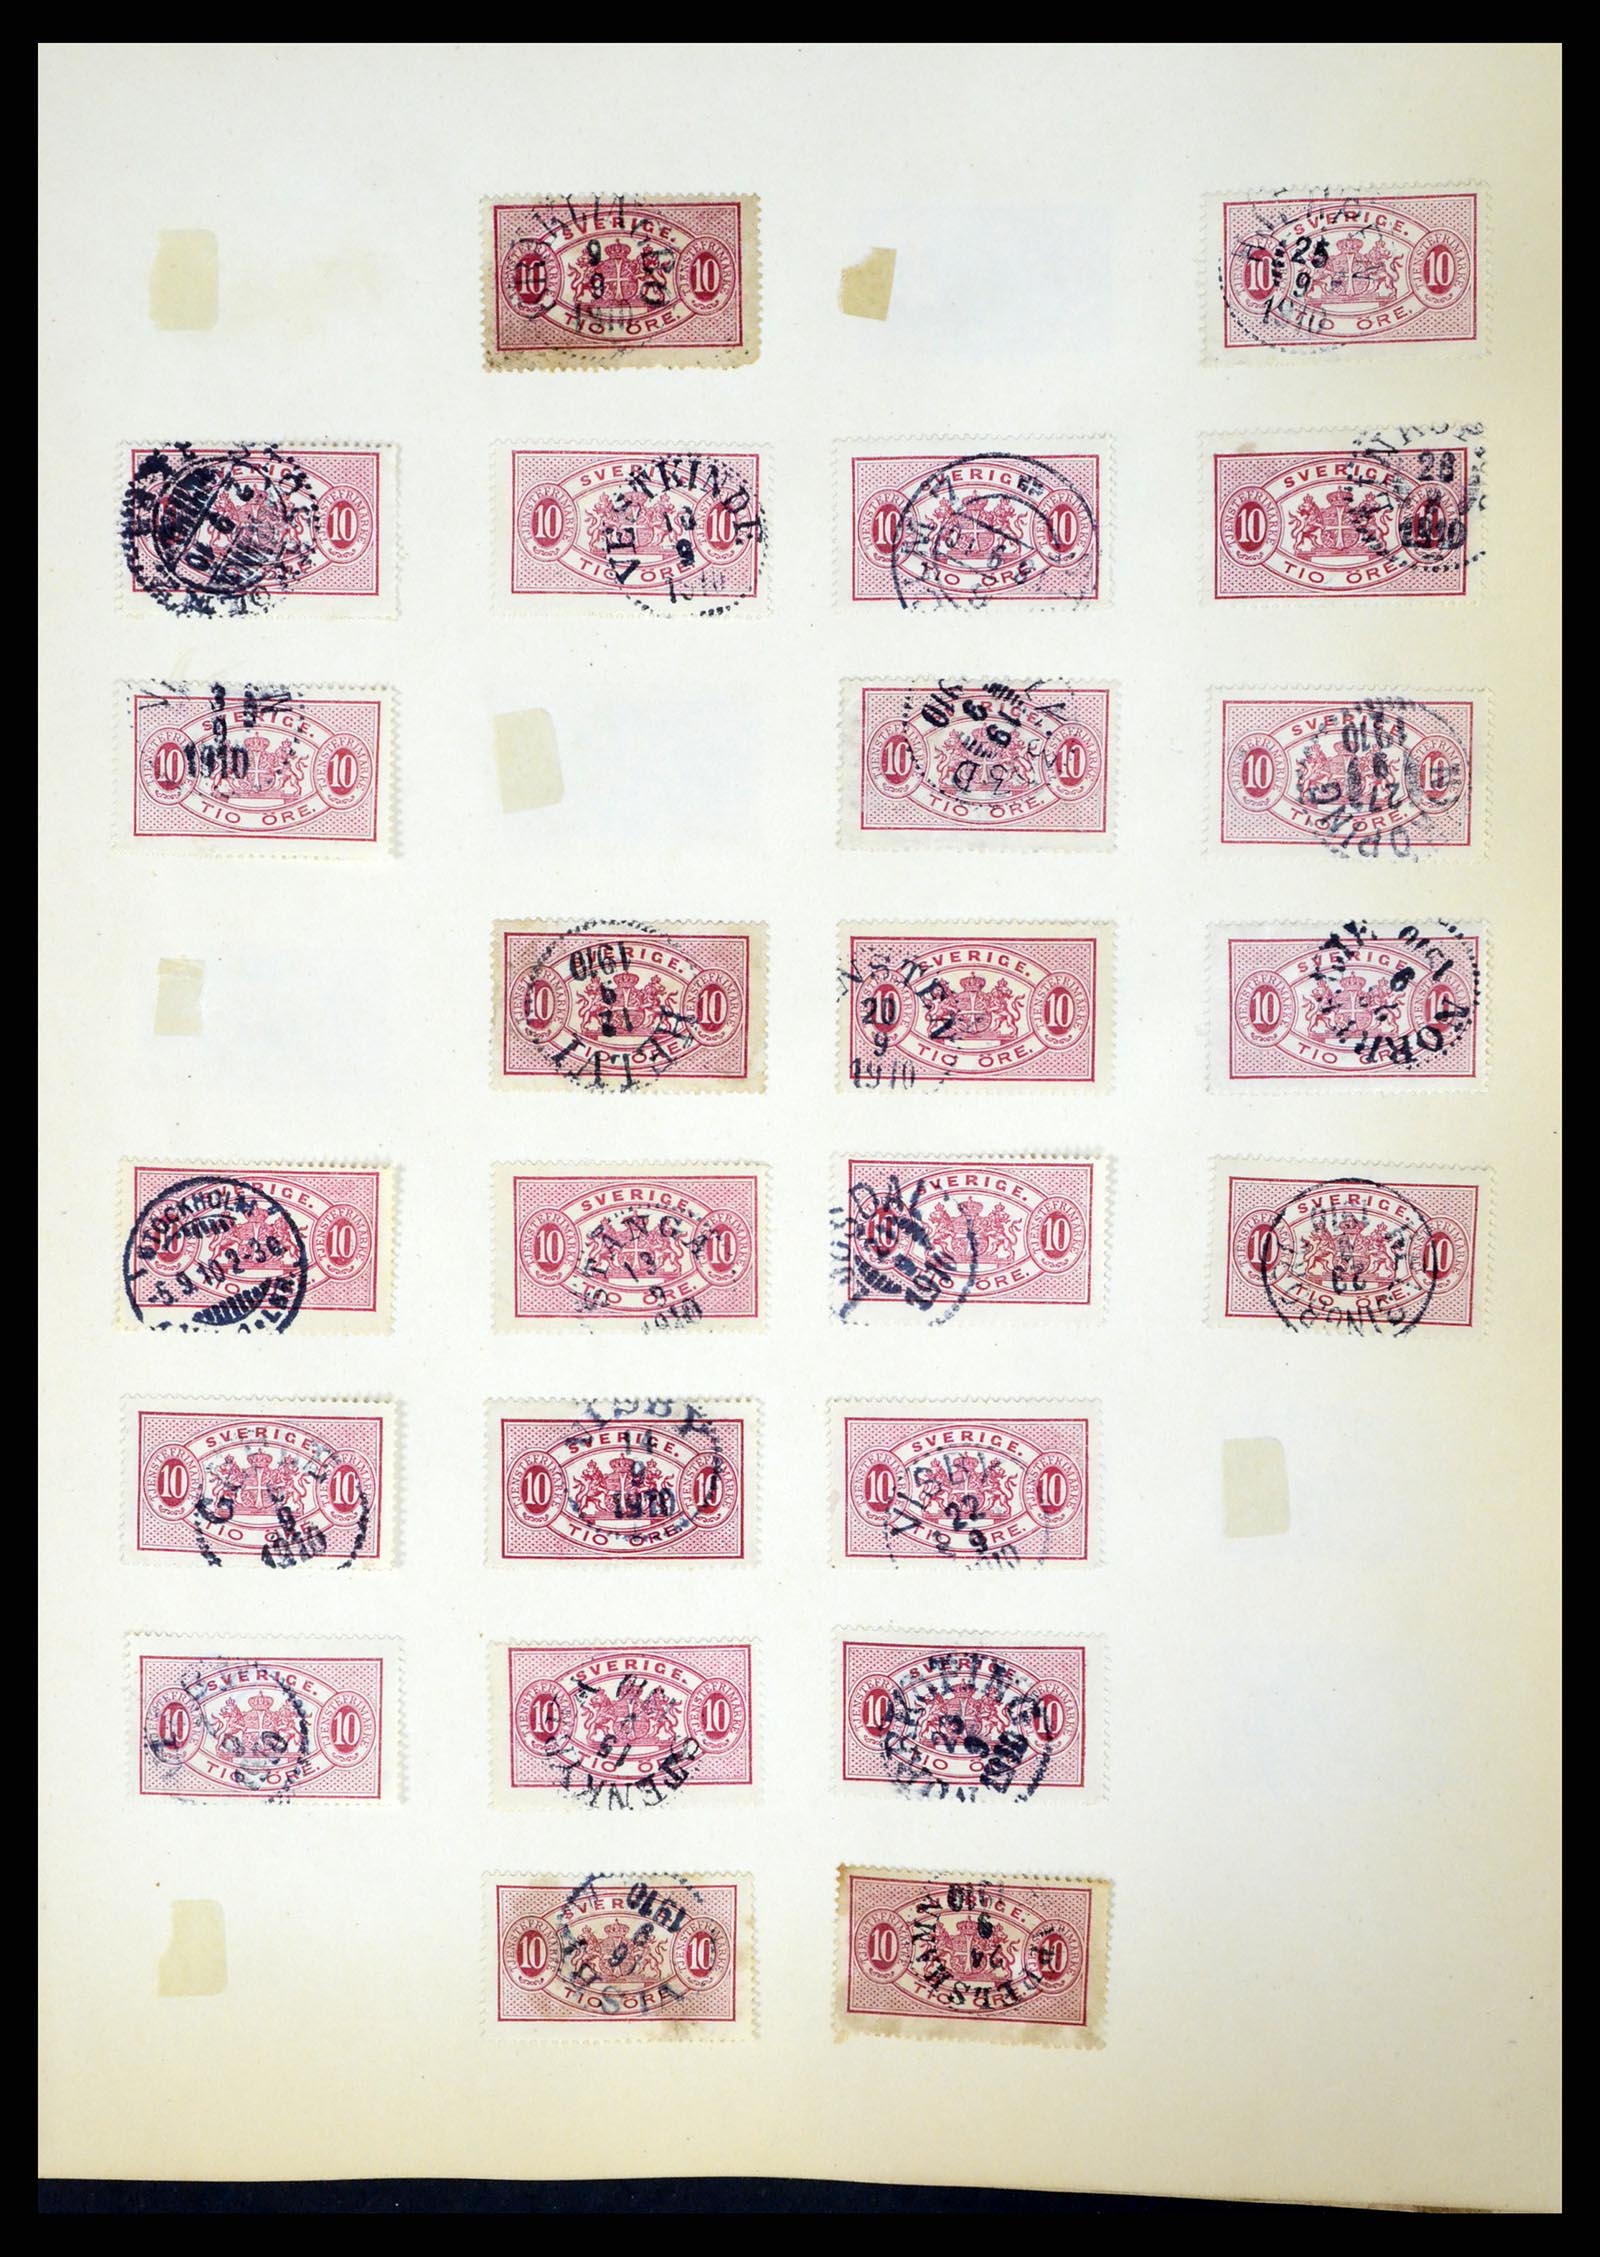 37916 250 - Stamp Collection 37916 Sweden cancels 1874-1896.